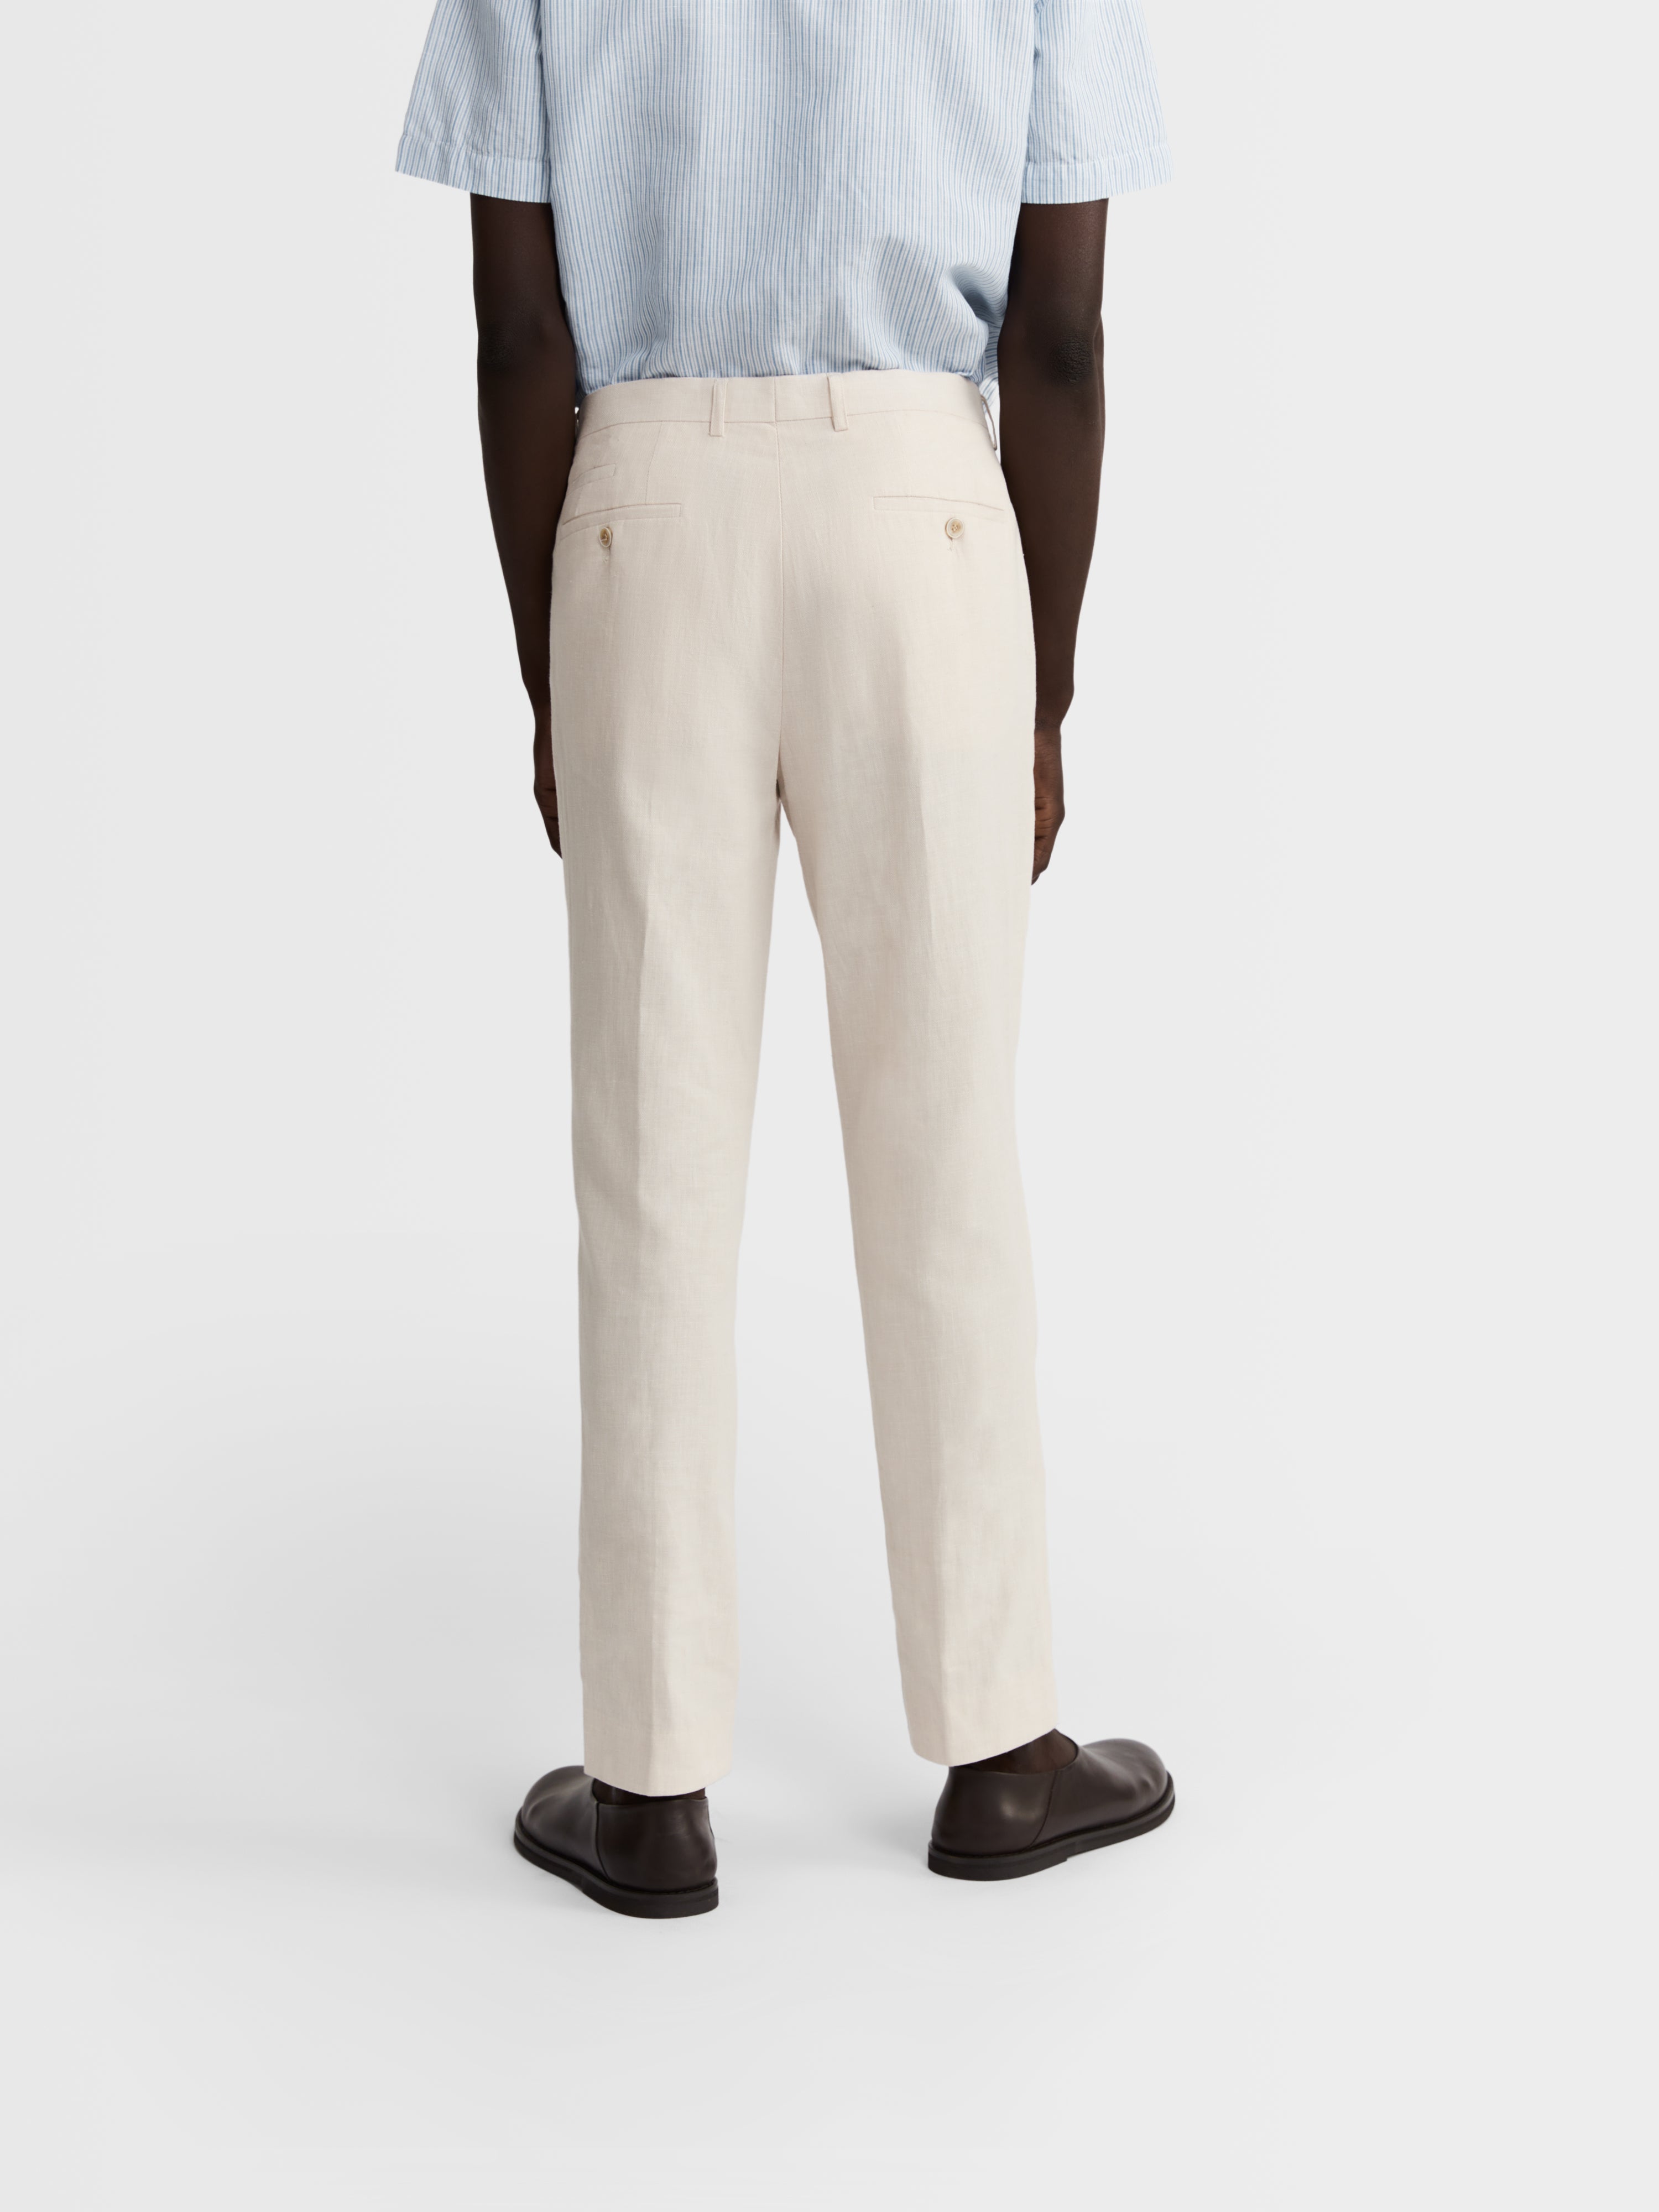 ZEGNA Wool and Linen-Blend Trousers for Men | MR PORTER